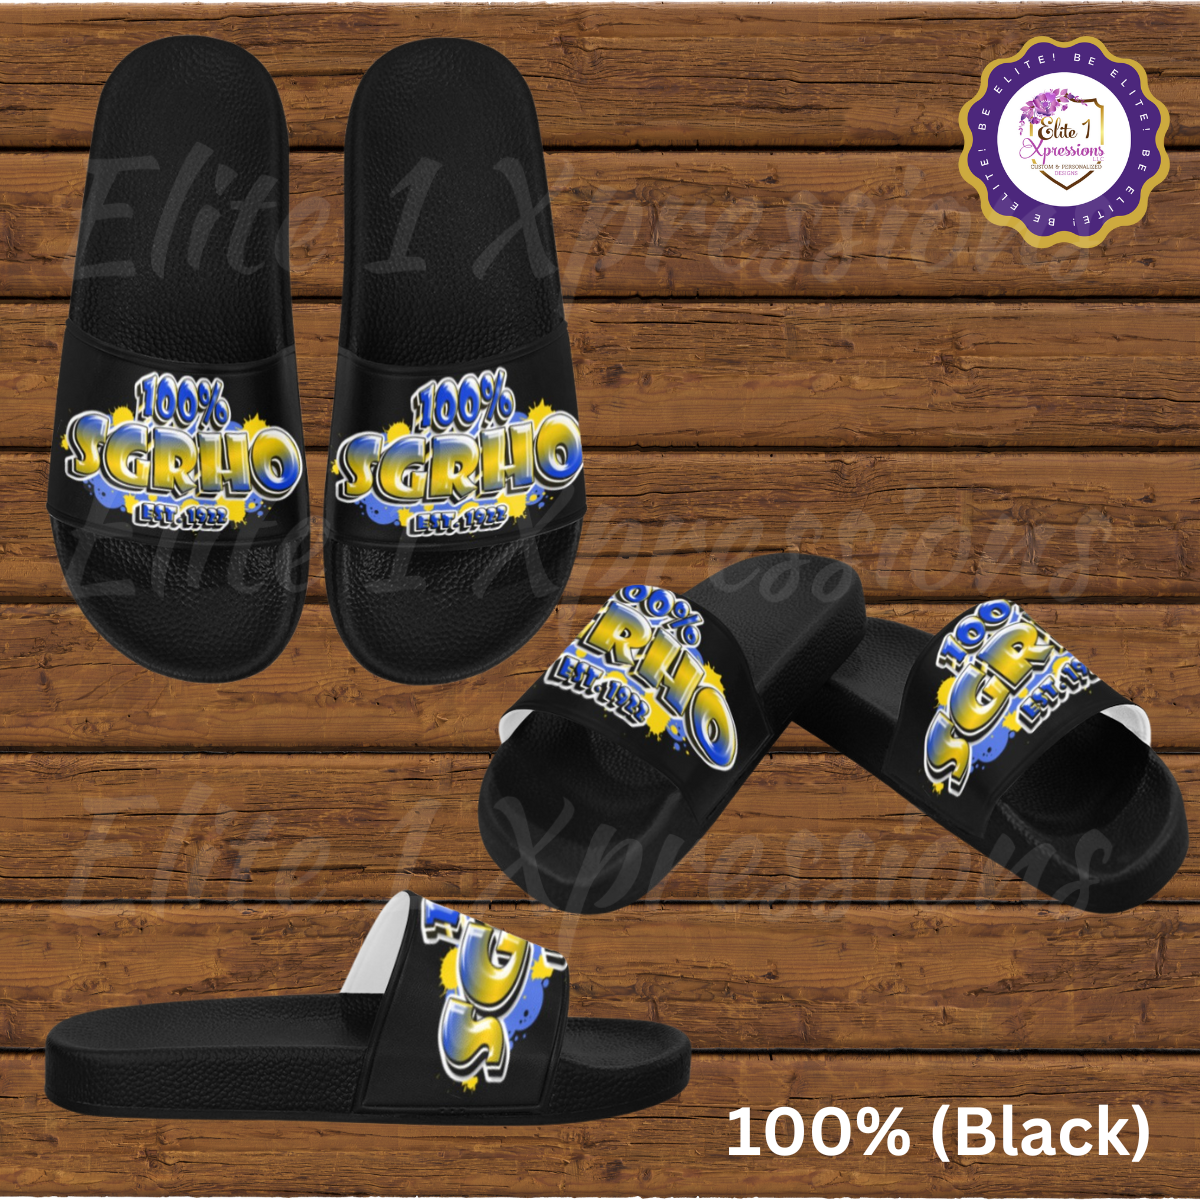 Slide Sandals ~ Sigma Gamma Rho (SGRHO)